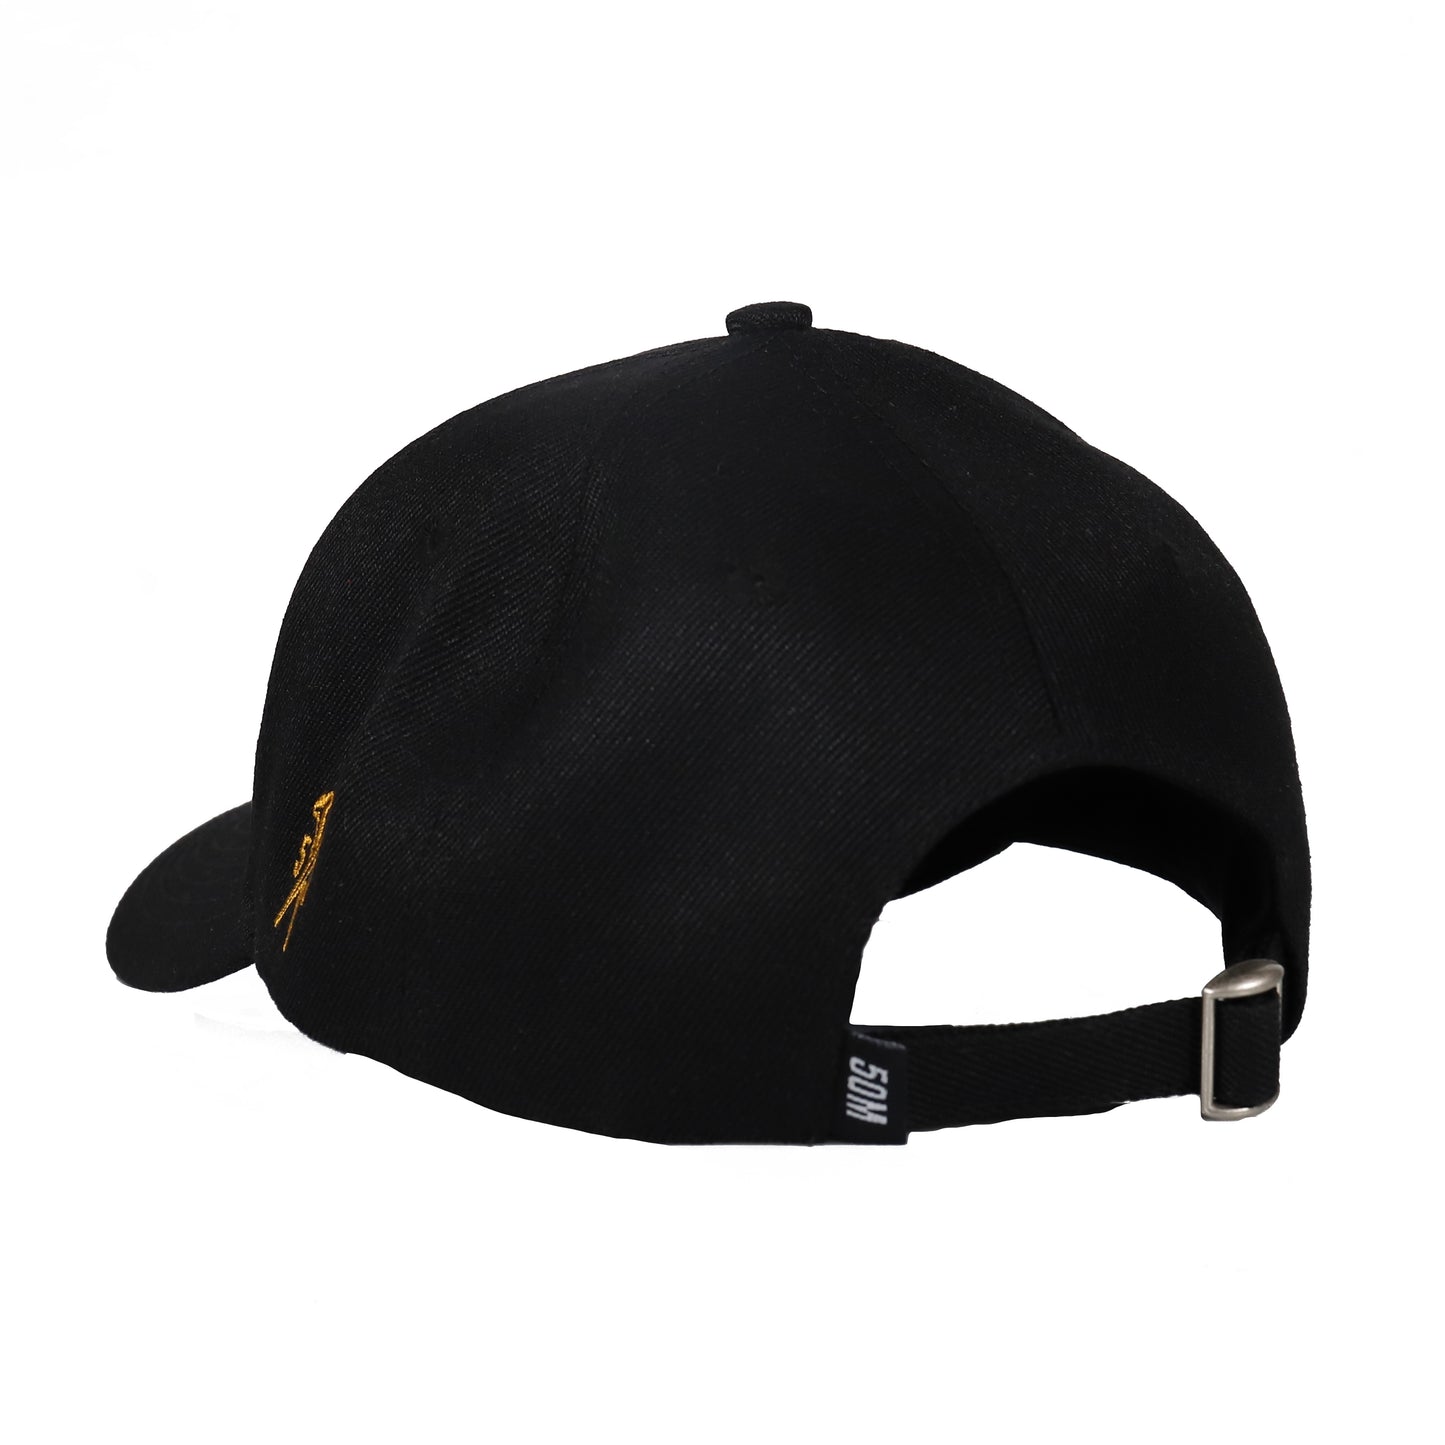 "5OM x KAOS x CHIODI" ripstop curved visor hat